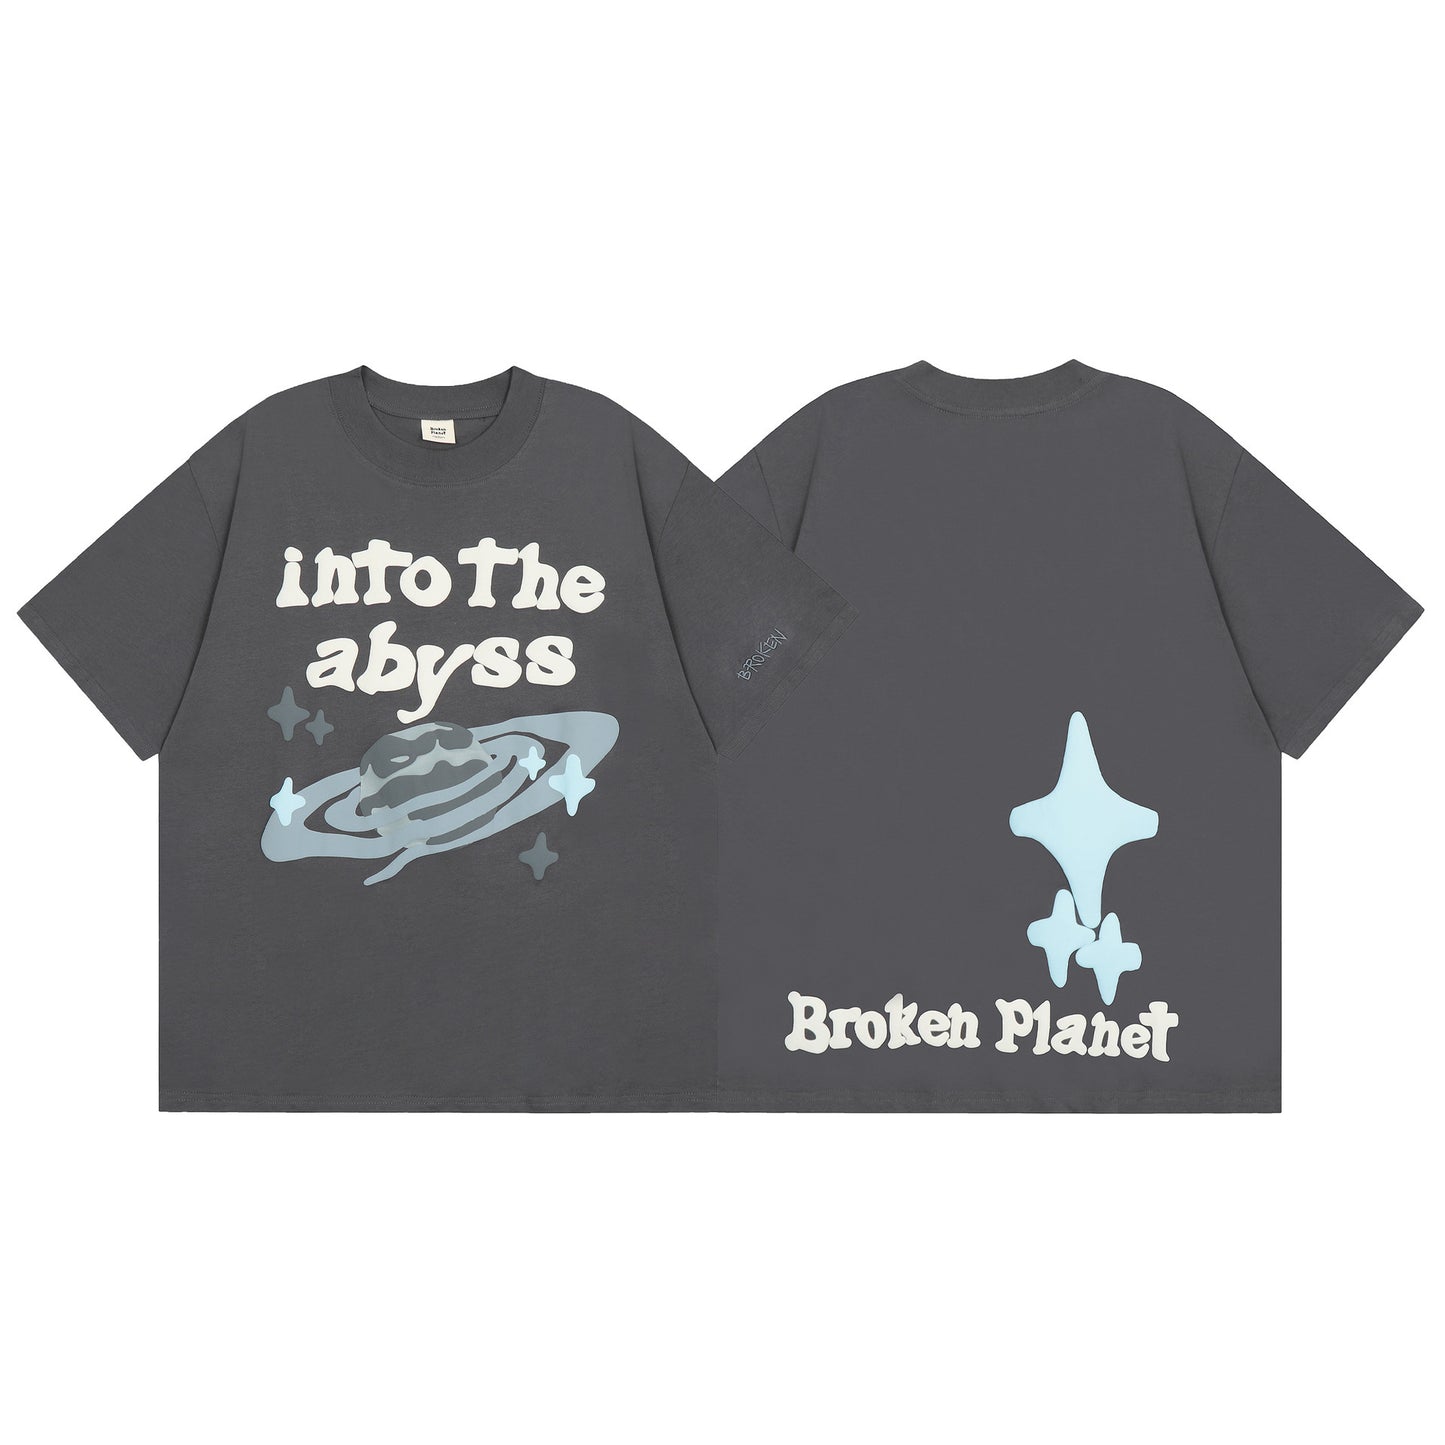 Broken Planet Men's Women's T-shirt 'into the abyss' Tee